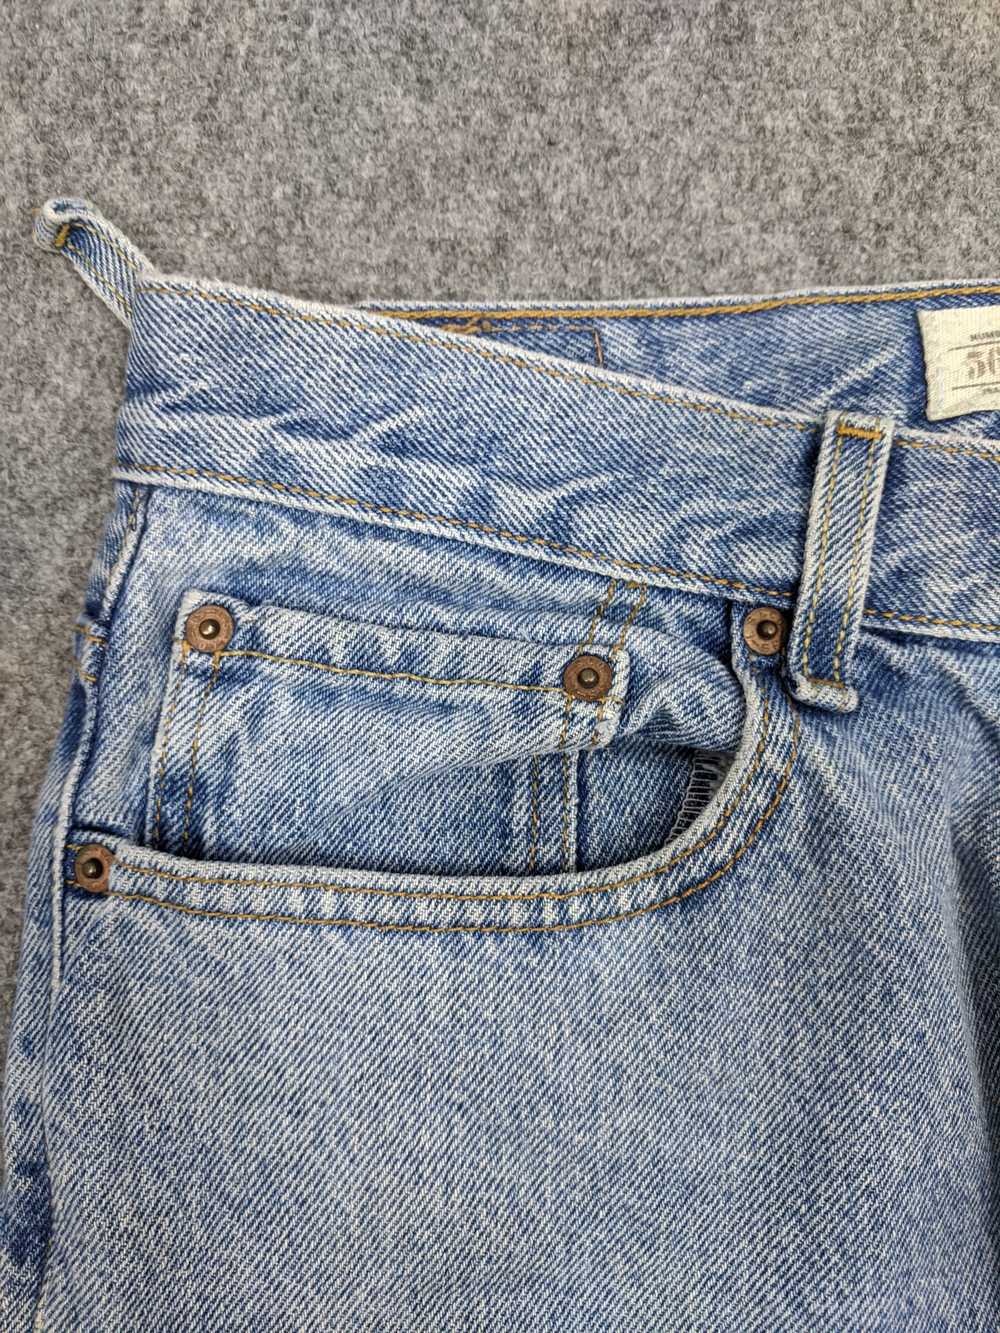 Vintage - Vintage Levis 569 Jeans - image 7